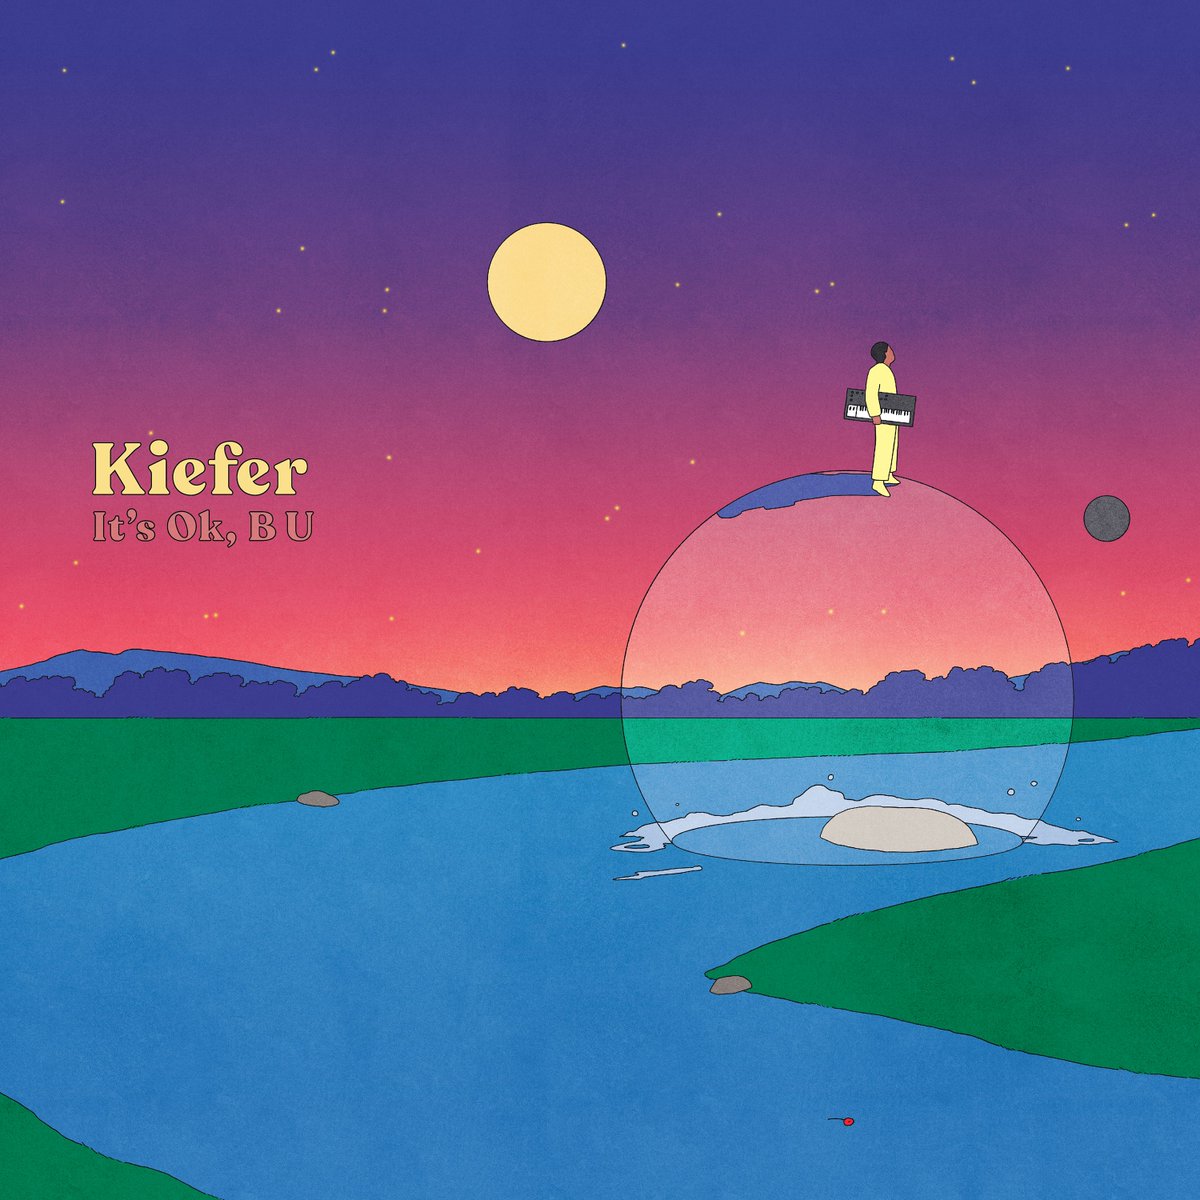 Kiefer announces new album ‘It’s OK, B U’ | Listen to the track 'August Again' martincid.com/en/2023/08/kie… via @martincid #Kiefer #newalbum #ItsOkBU #musicvideo